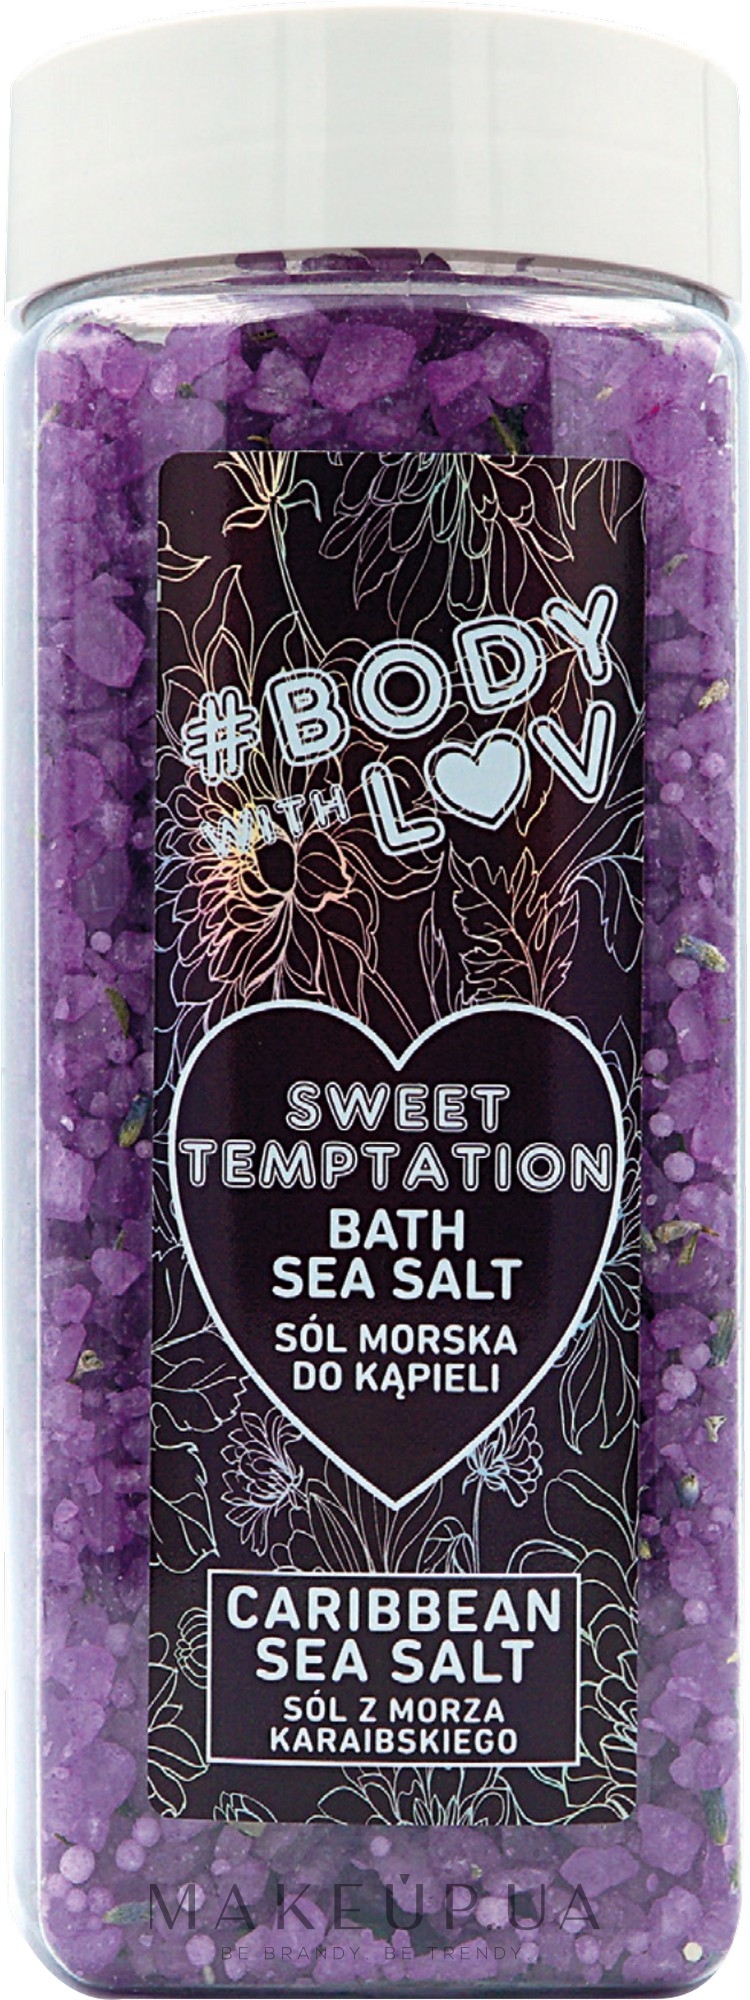 Соль для ванн "Сладкий соблазн" - New Anna Cosmetics Body With Luv Sea Salt For Bath Sweet Temptation — фото 500g